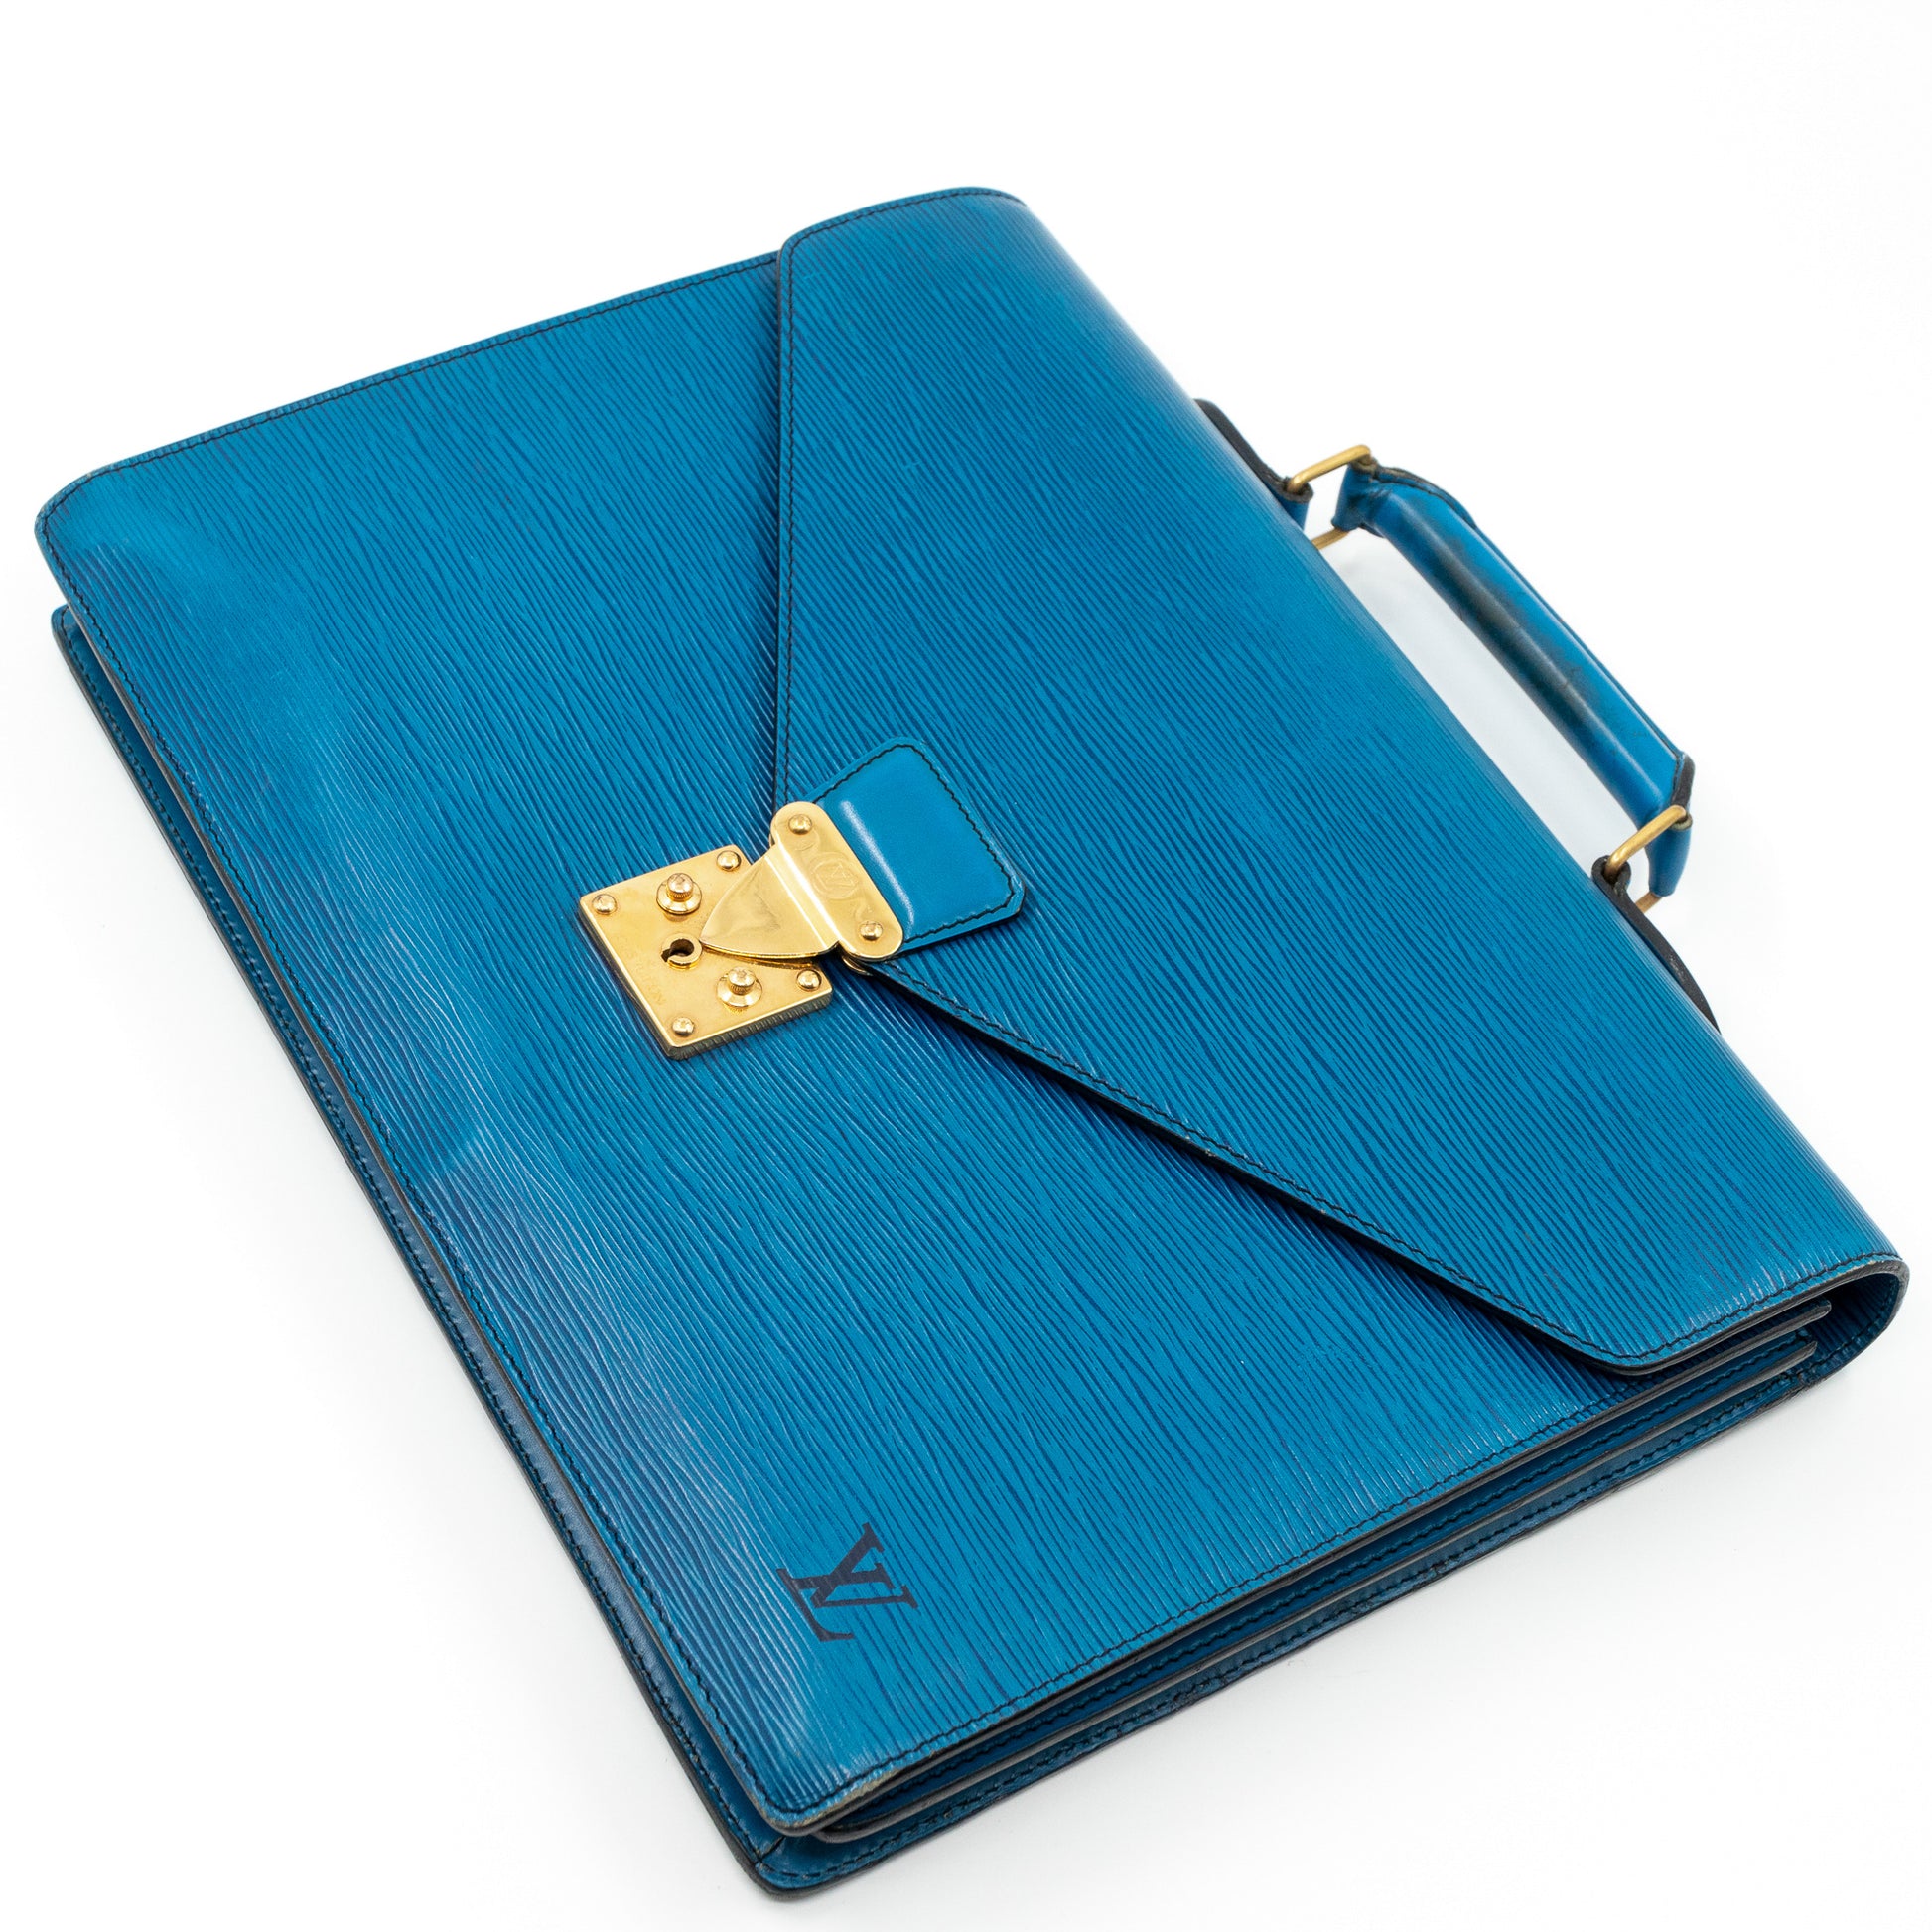 Louis Vuitton – Louis Vuitton Serviette Conseiller Ambassadeur Blue Epi  Leather – Queen Station